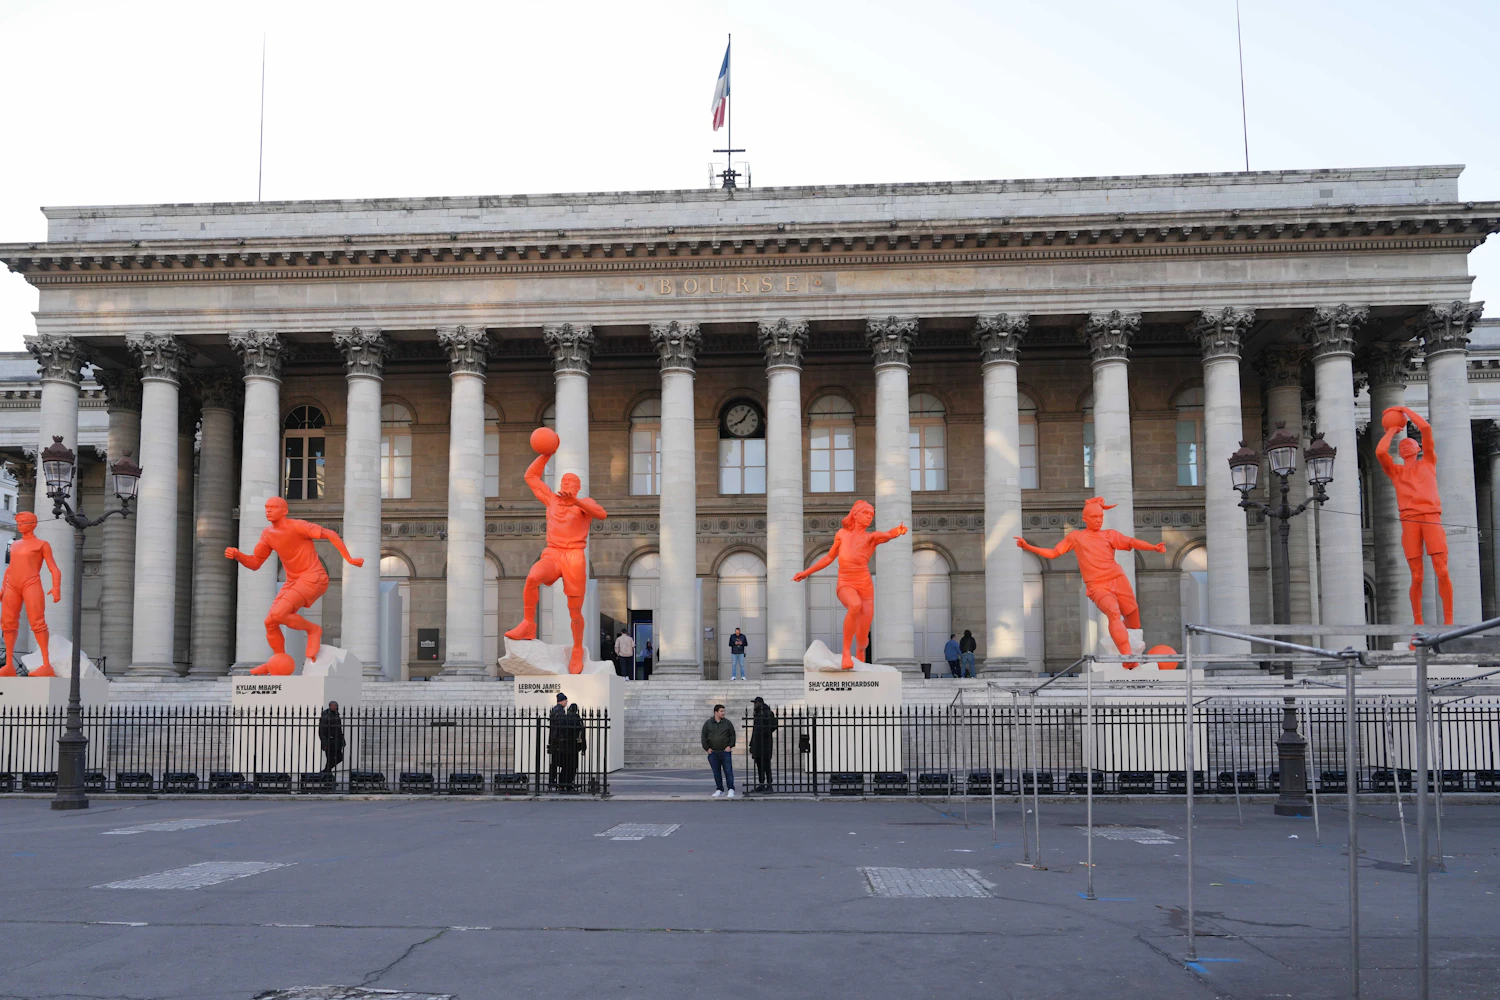 「Nike On Air」の会場となったのはパリのブロンニャール宮殿。エントランスにはアスリートの彫像が置かれた